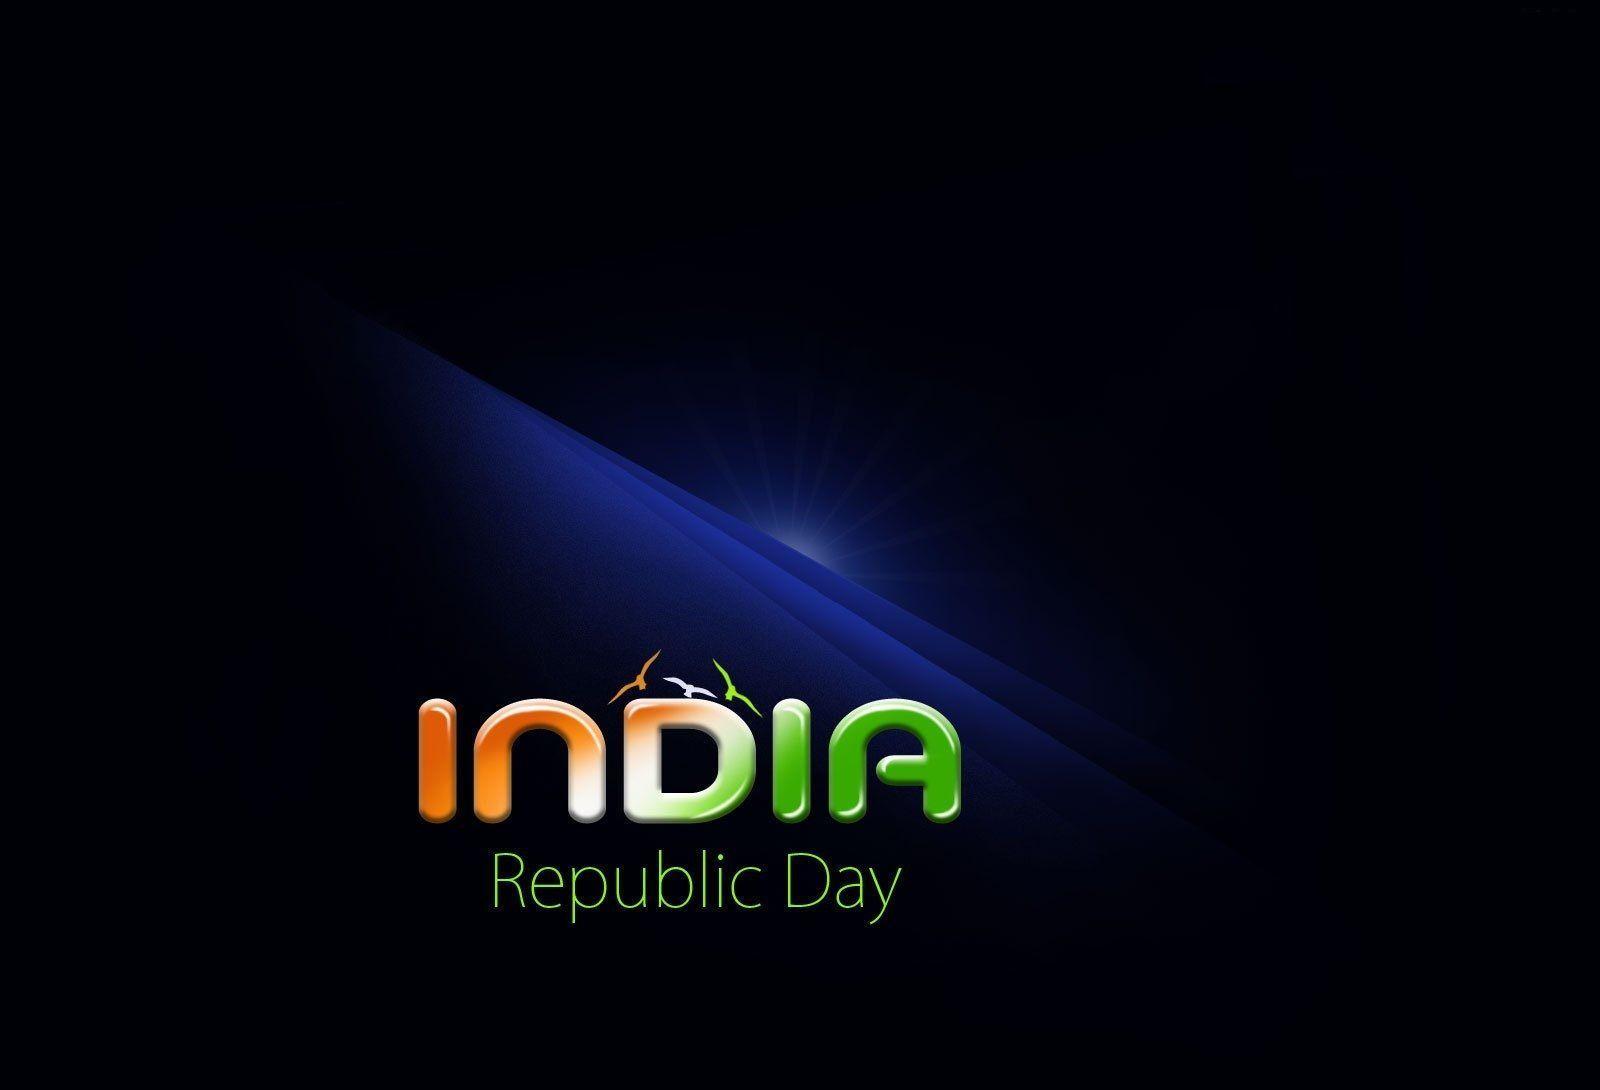 India Republic Day HD Desktop Wallpaper. HD Wallpaper Free Download